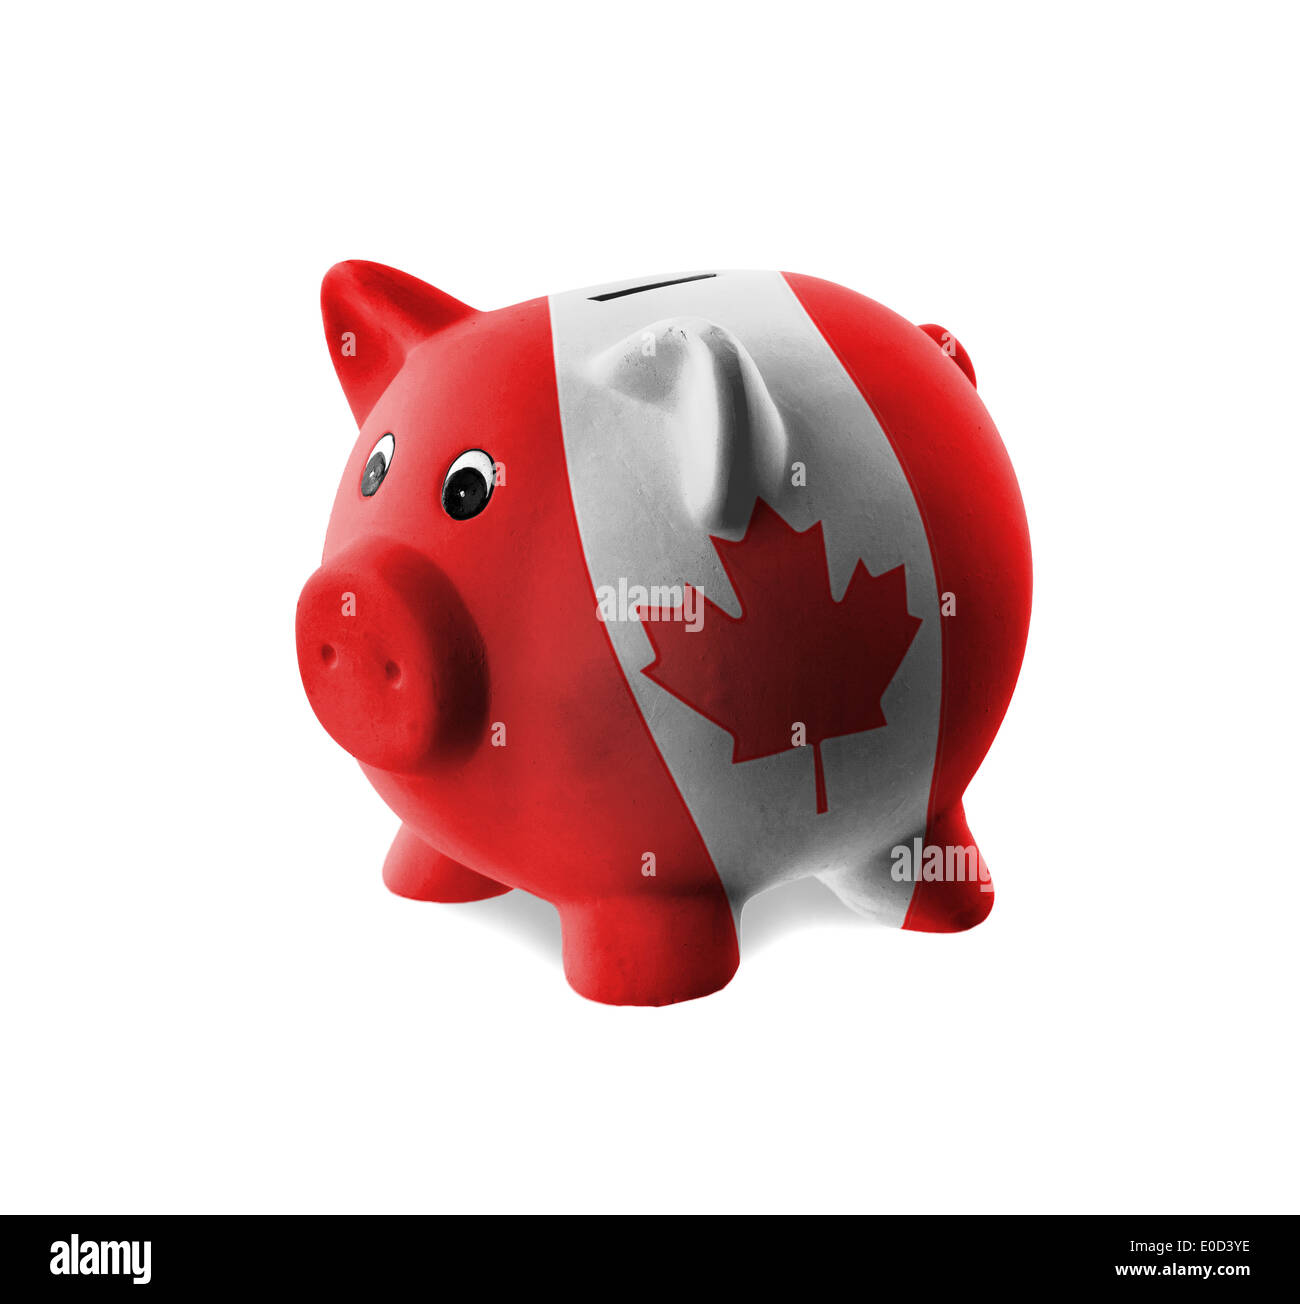 Keramik Sparschwein mit Malerei der Nationalflagge Kanada Stockfotografie -  Alamy